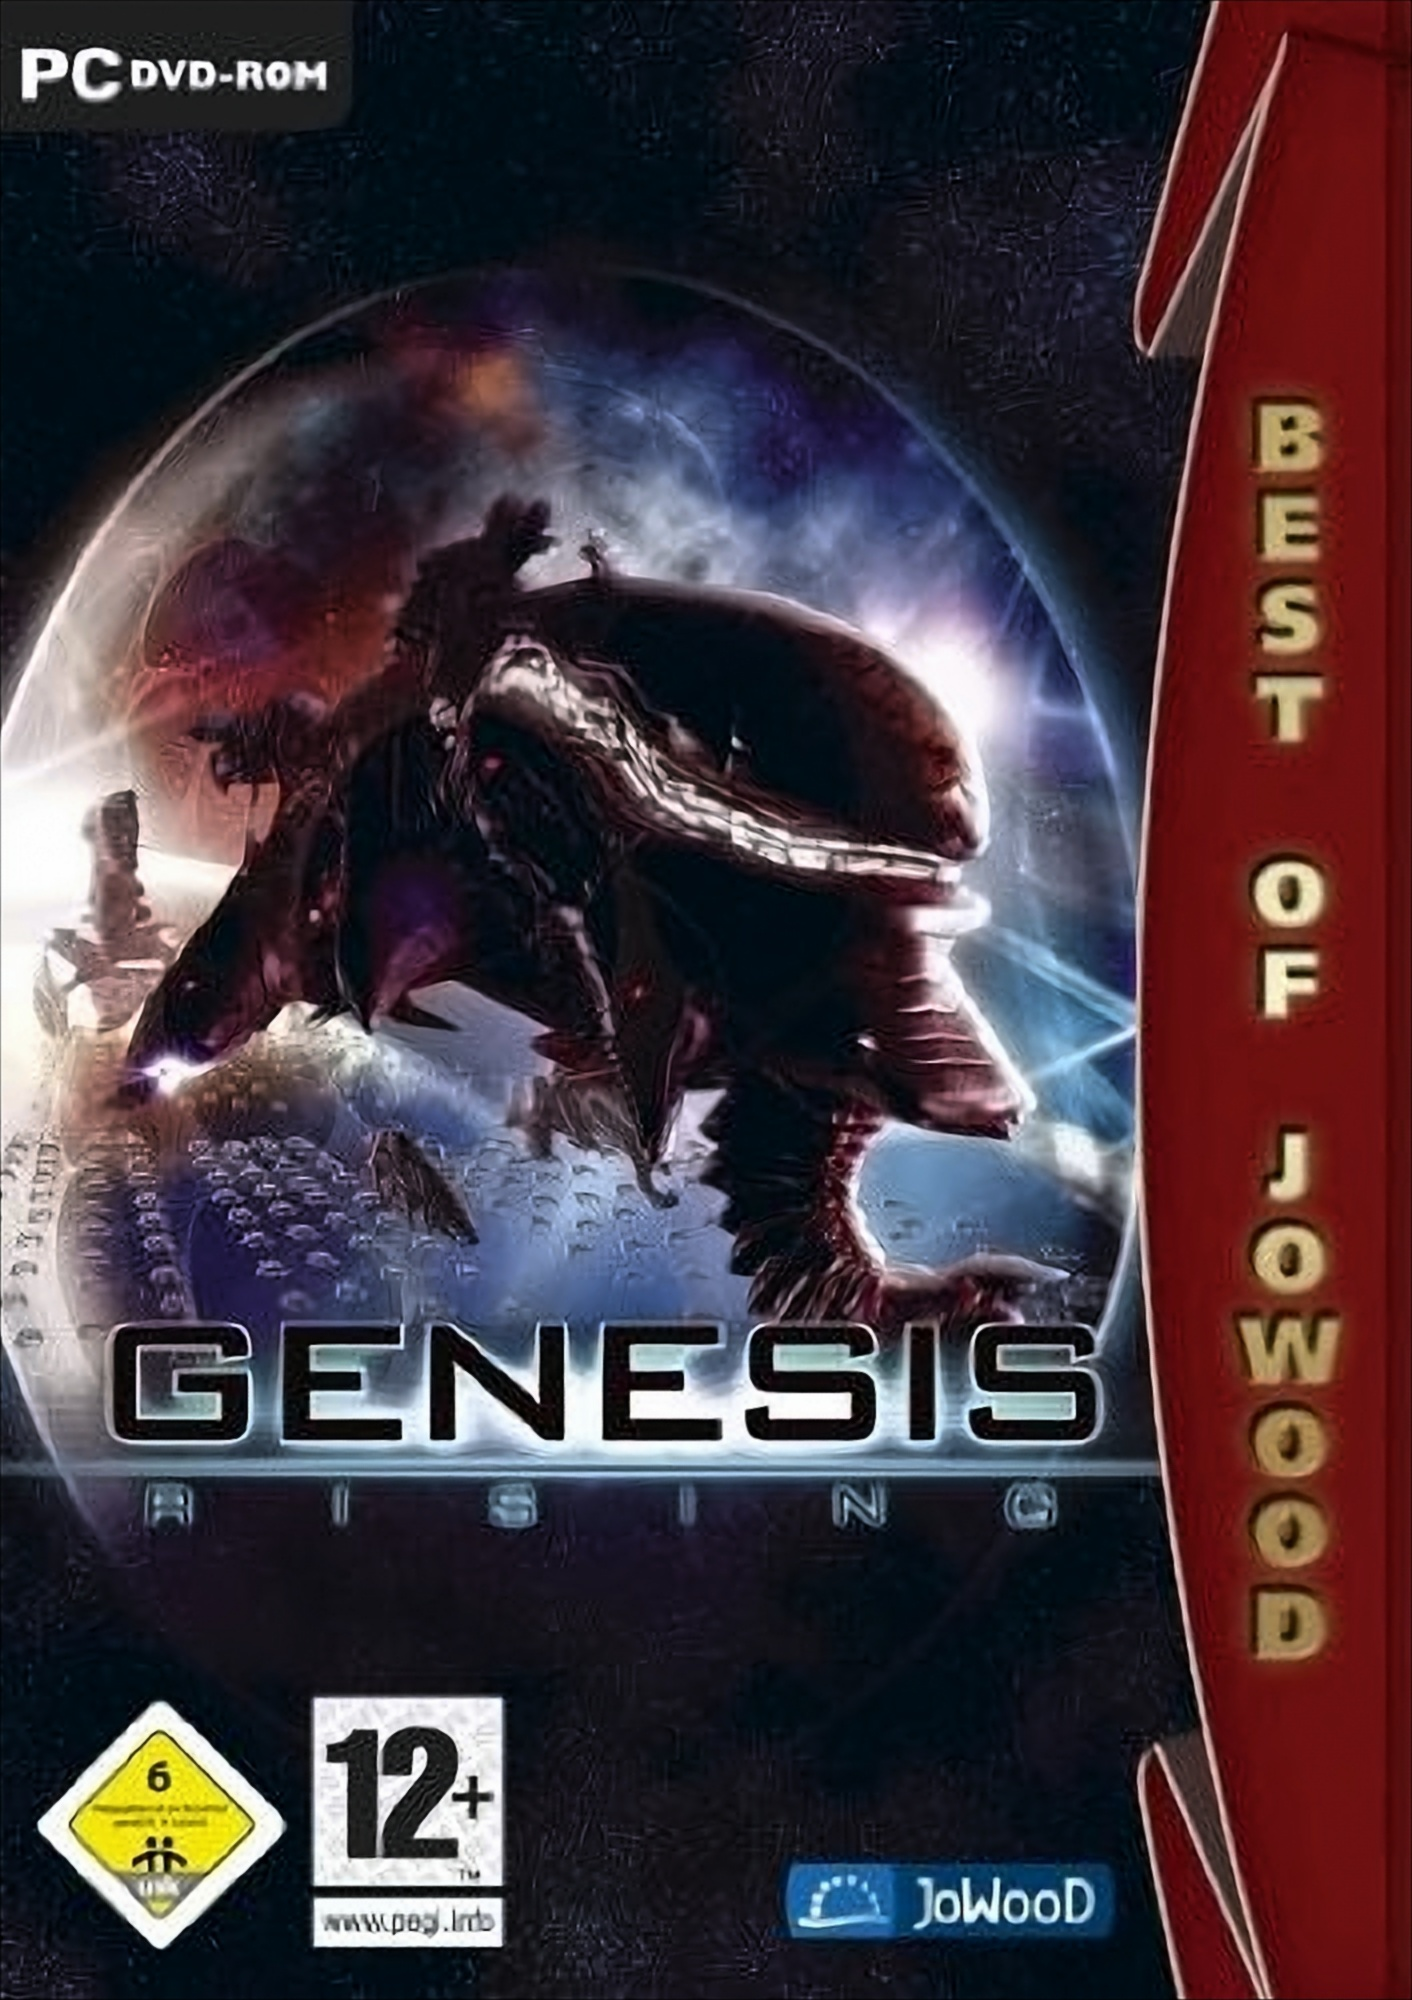 The Crusade Universal Rising: Genesis [PC] -